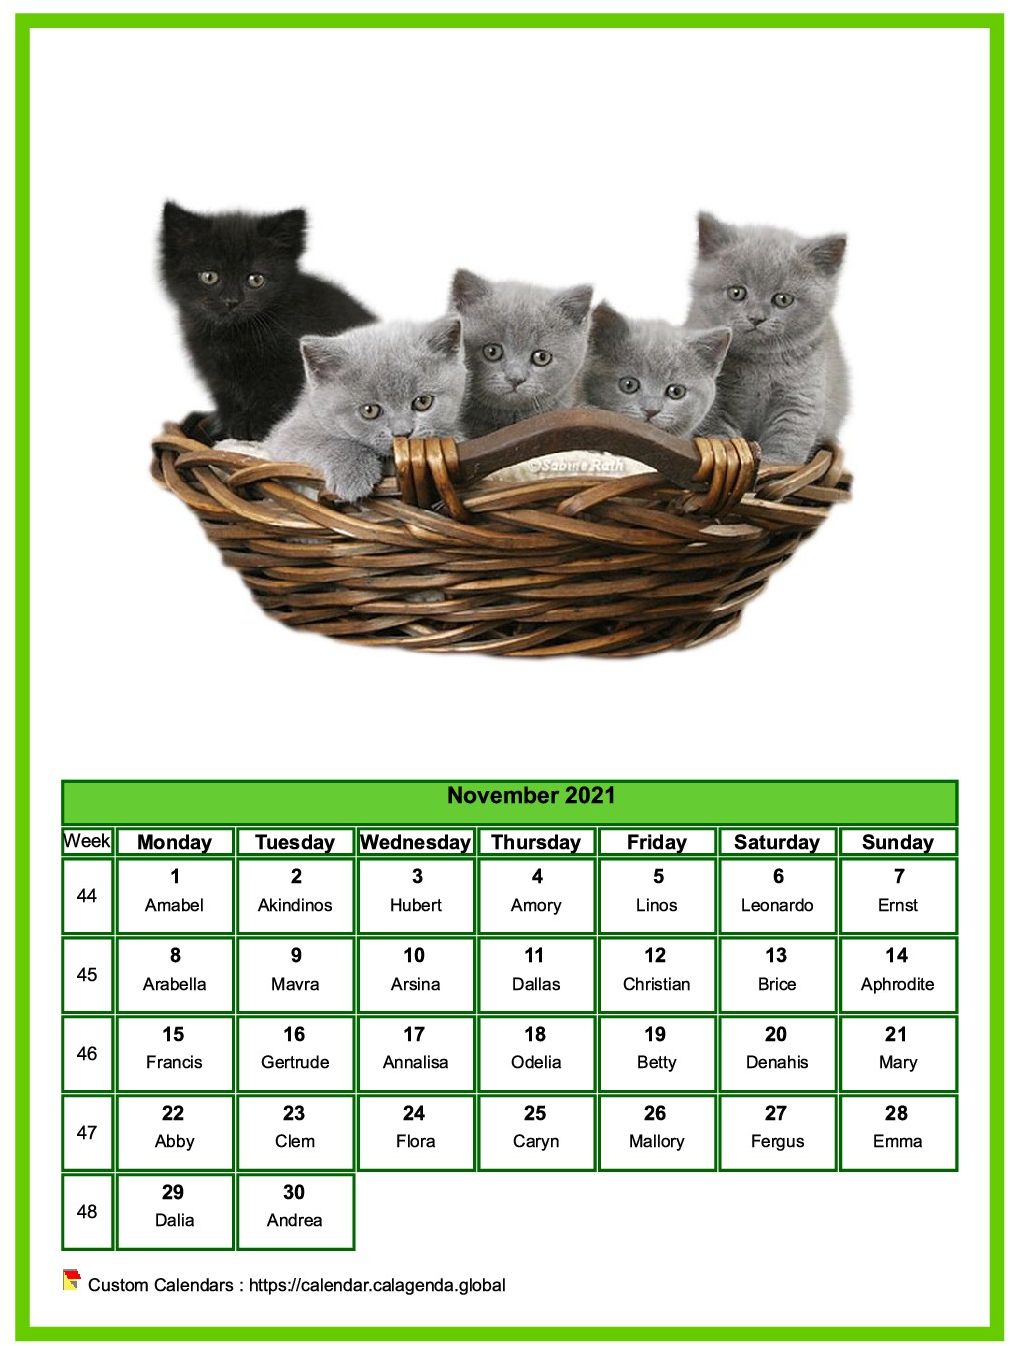 Calendar November 2021 cats